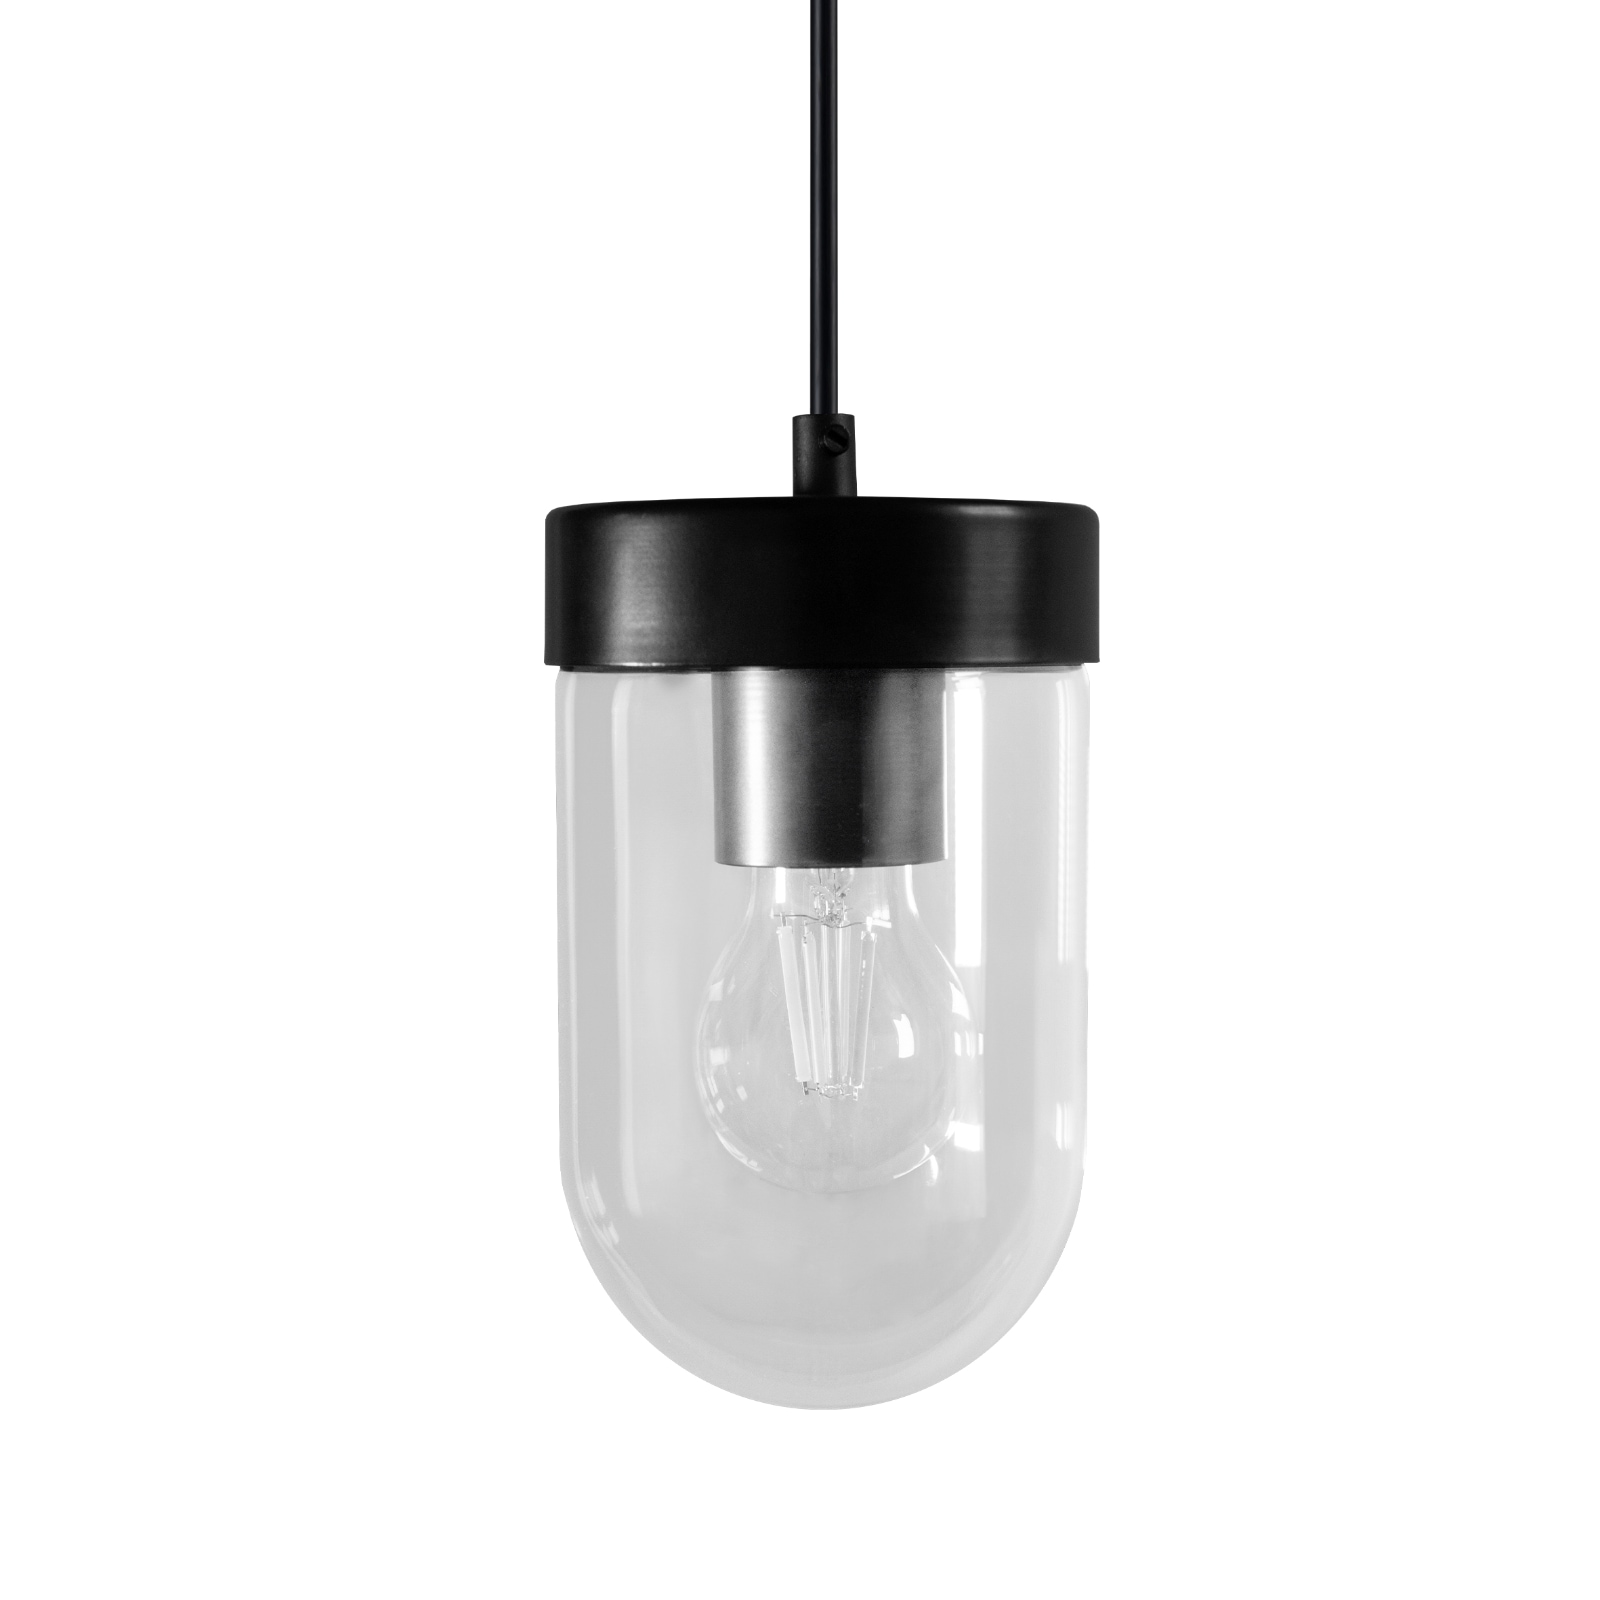 Timeless Pendant Light with Cylindrical Glass DAVY: Klassisch in Schwarz seidenmatt mit schwarzem PVC-Kabel